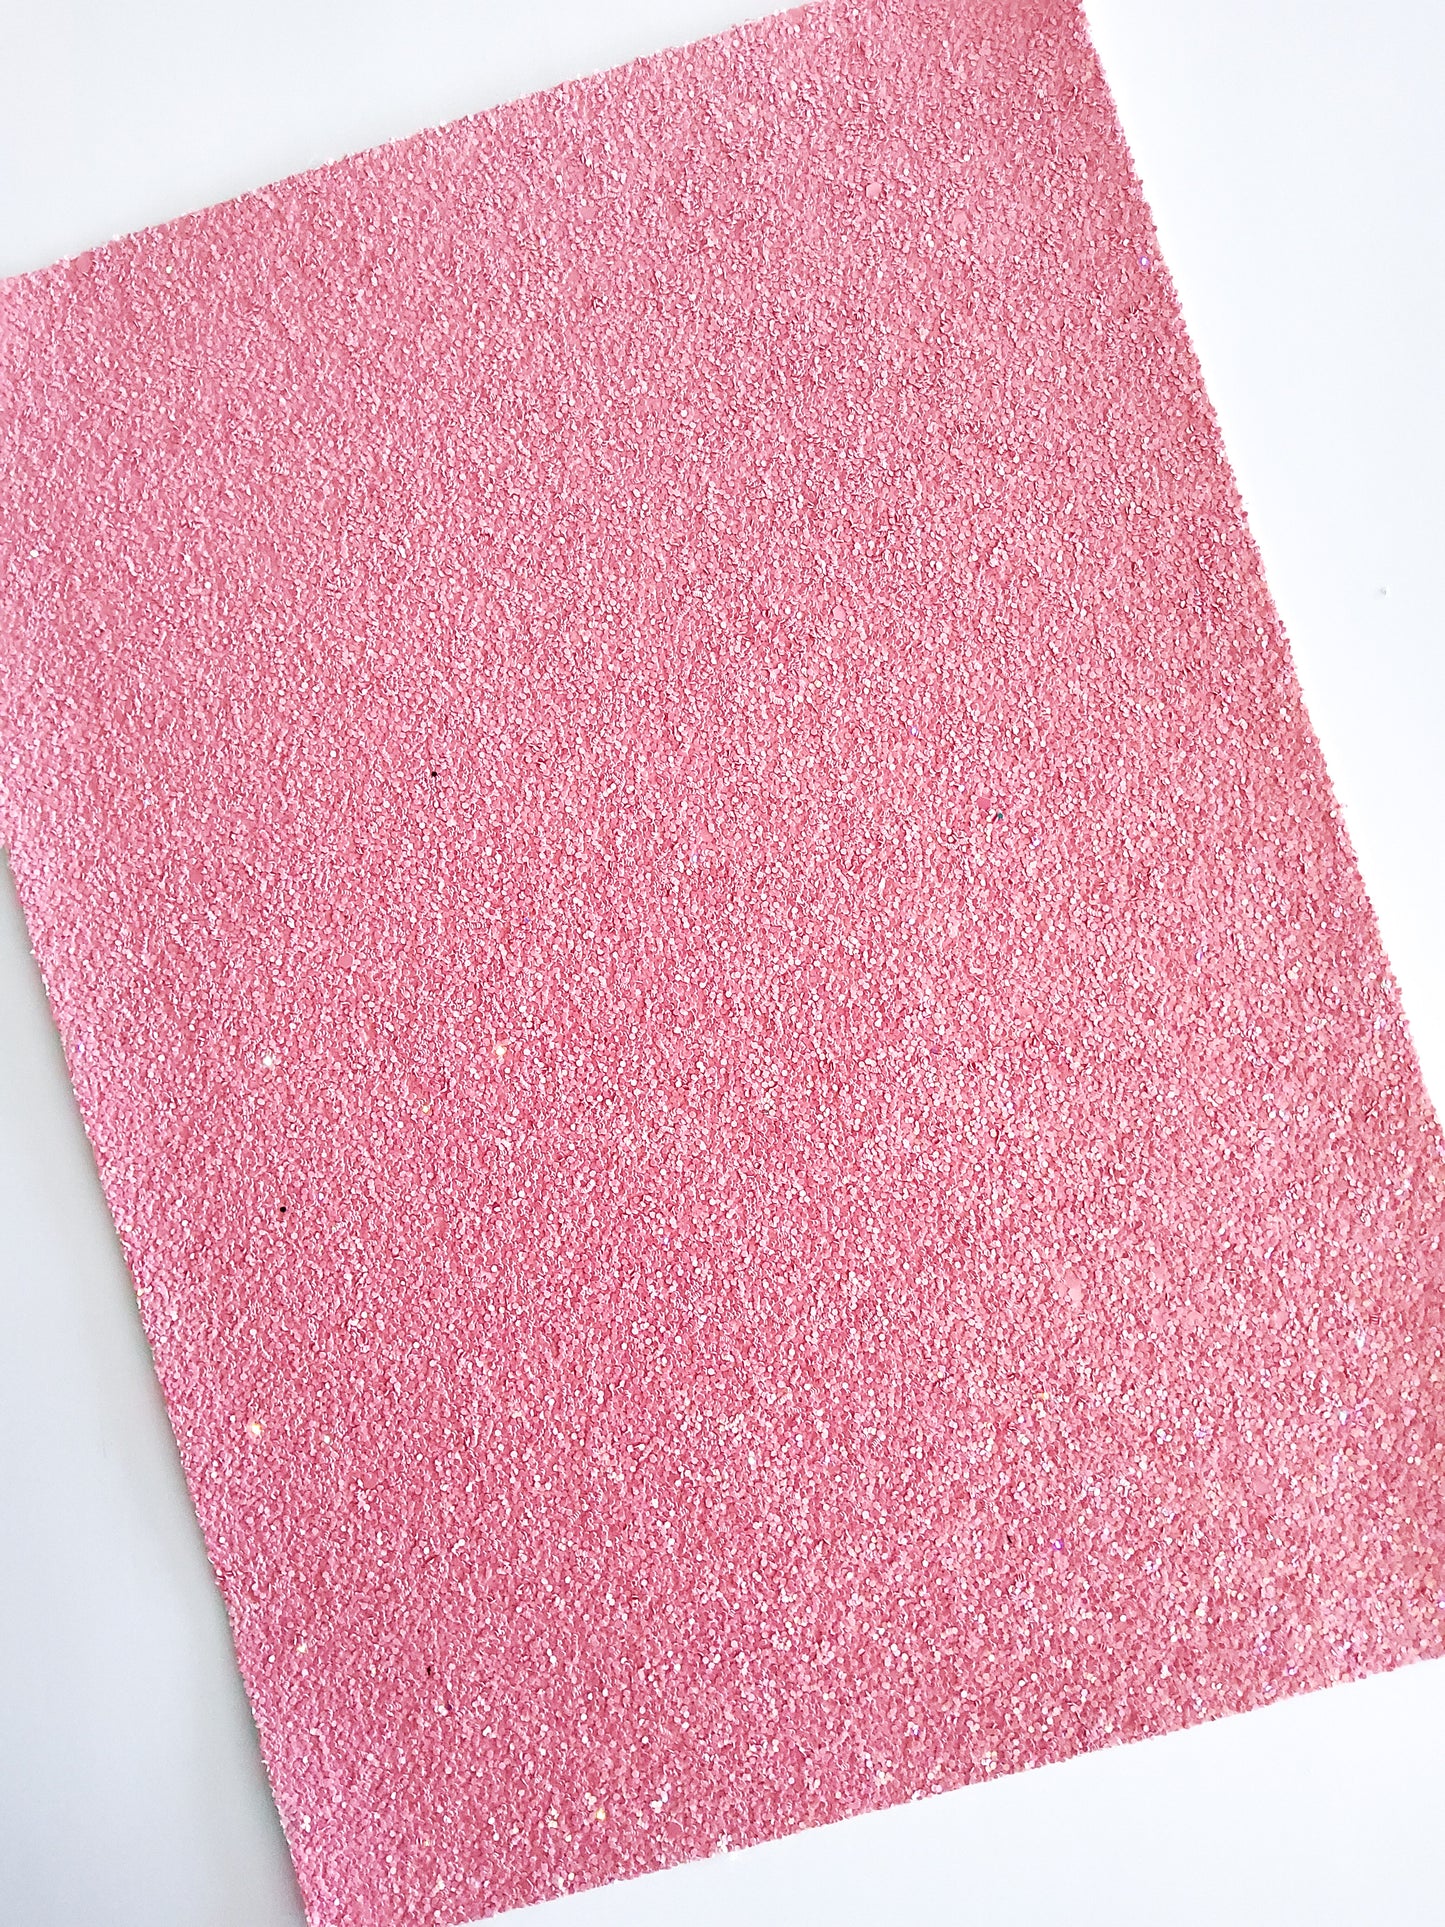 Flamingo Pink Chunky Glitter 9x12 faux leather sheet